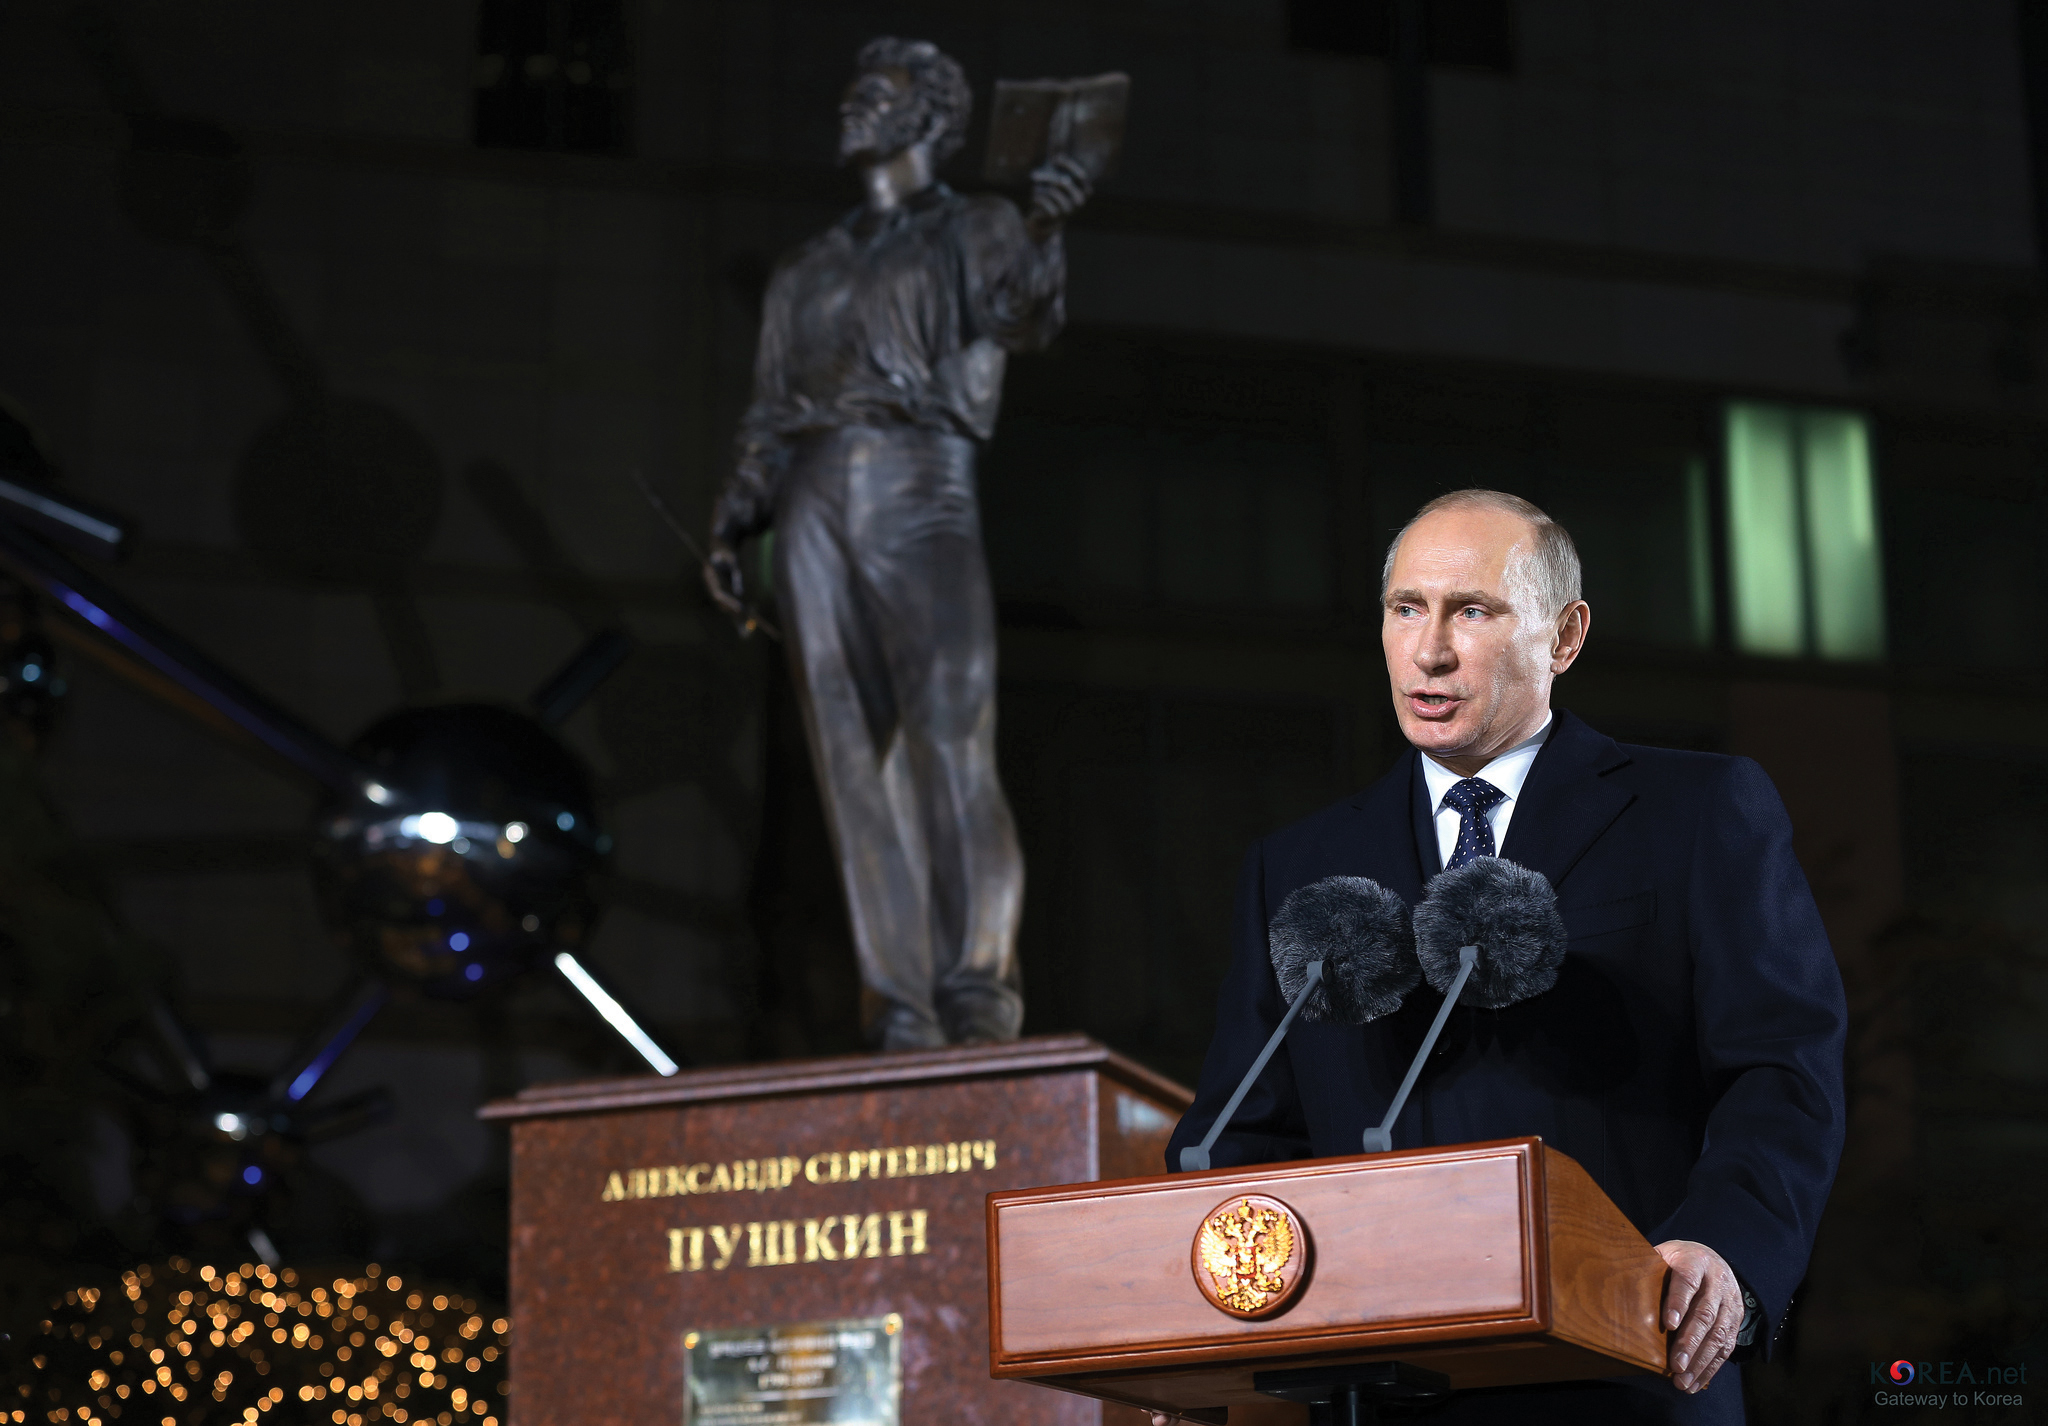  Nominan a Vladimir Putin para el Nobel de la Paz